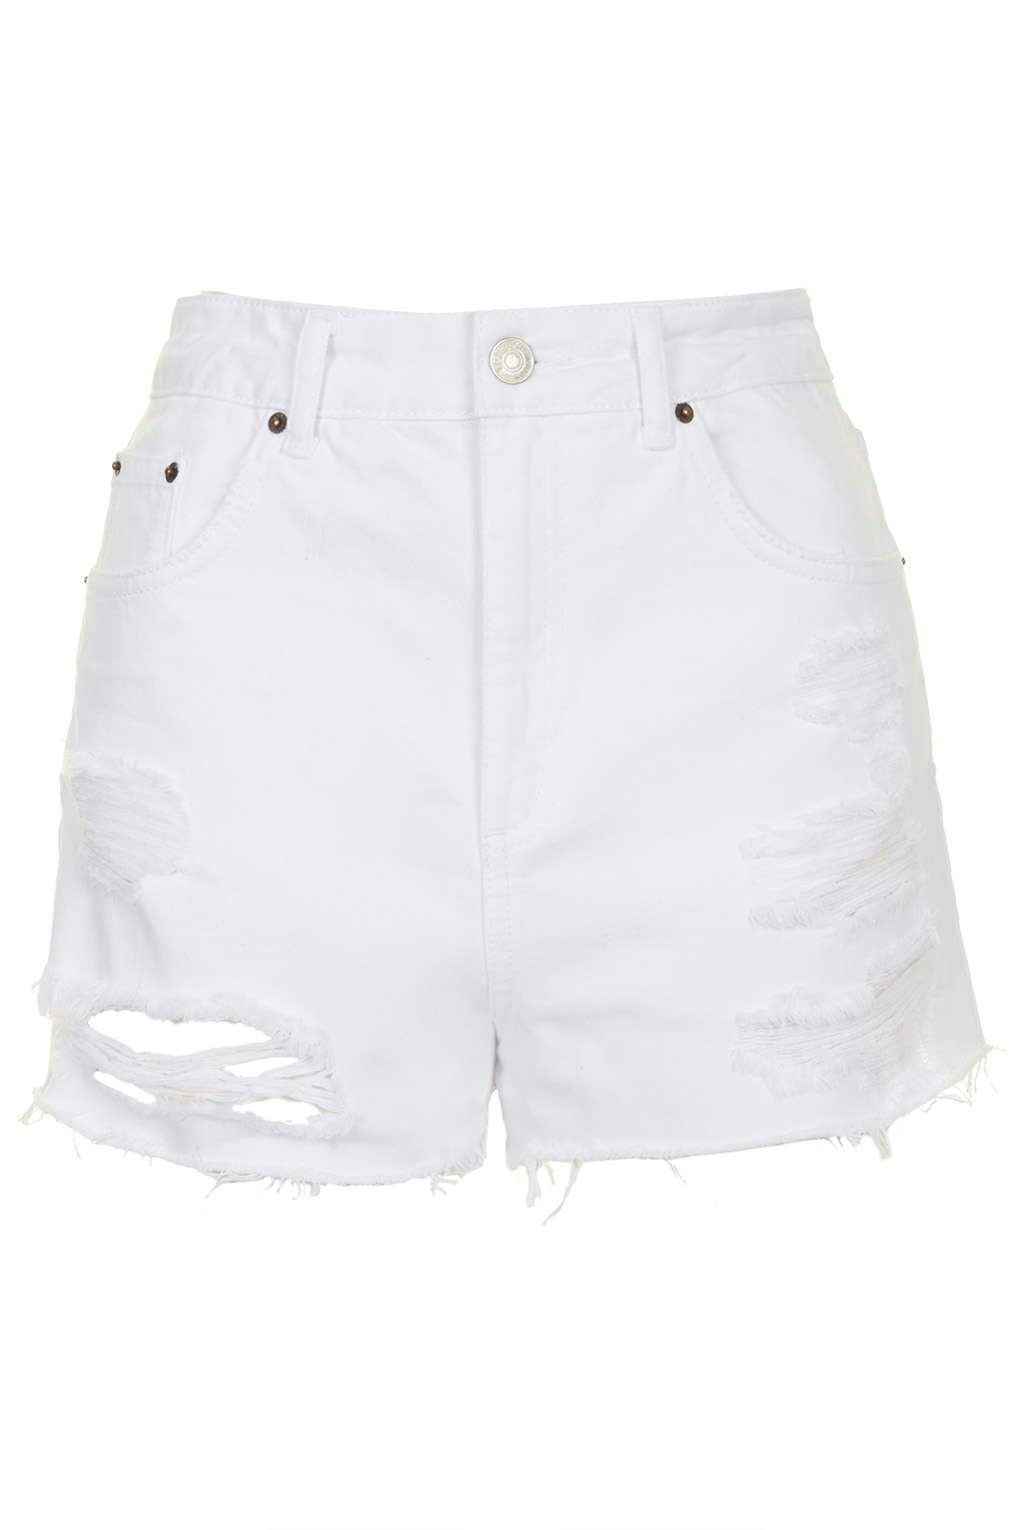 white jean shorts high waisted